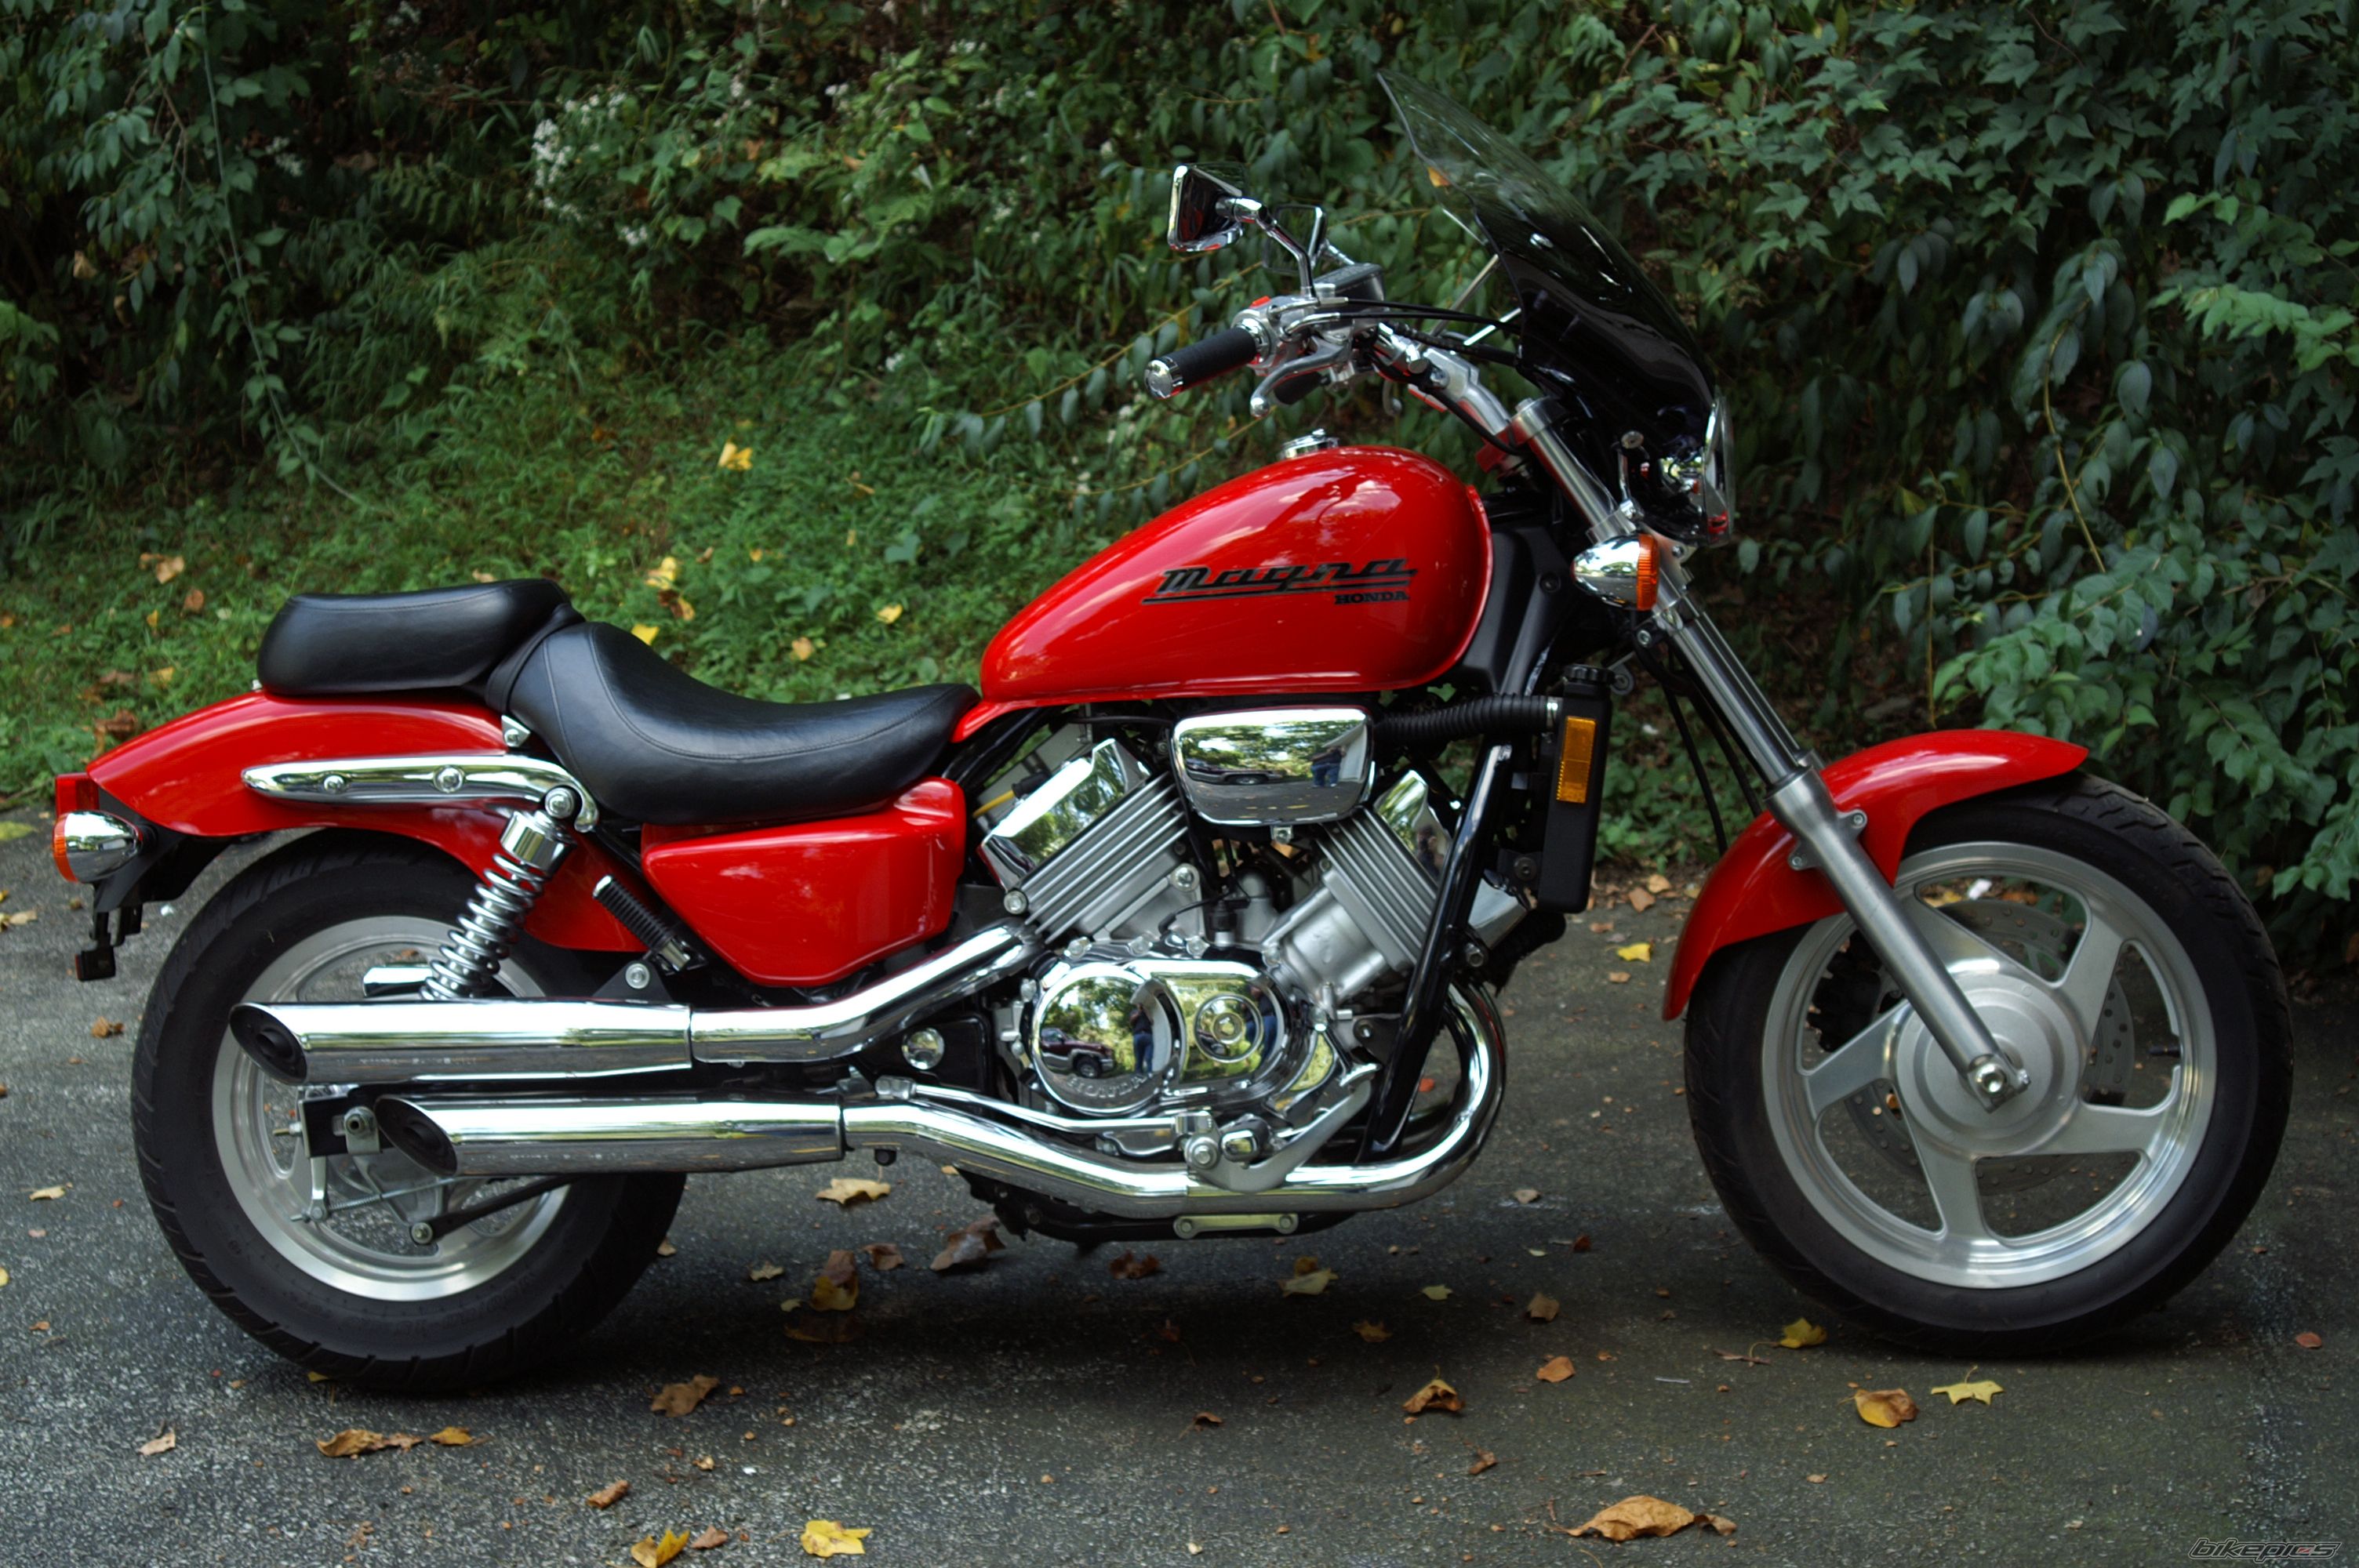 Мотоцикл honda vf 750 c super magna v45 1990: советы эксперта